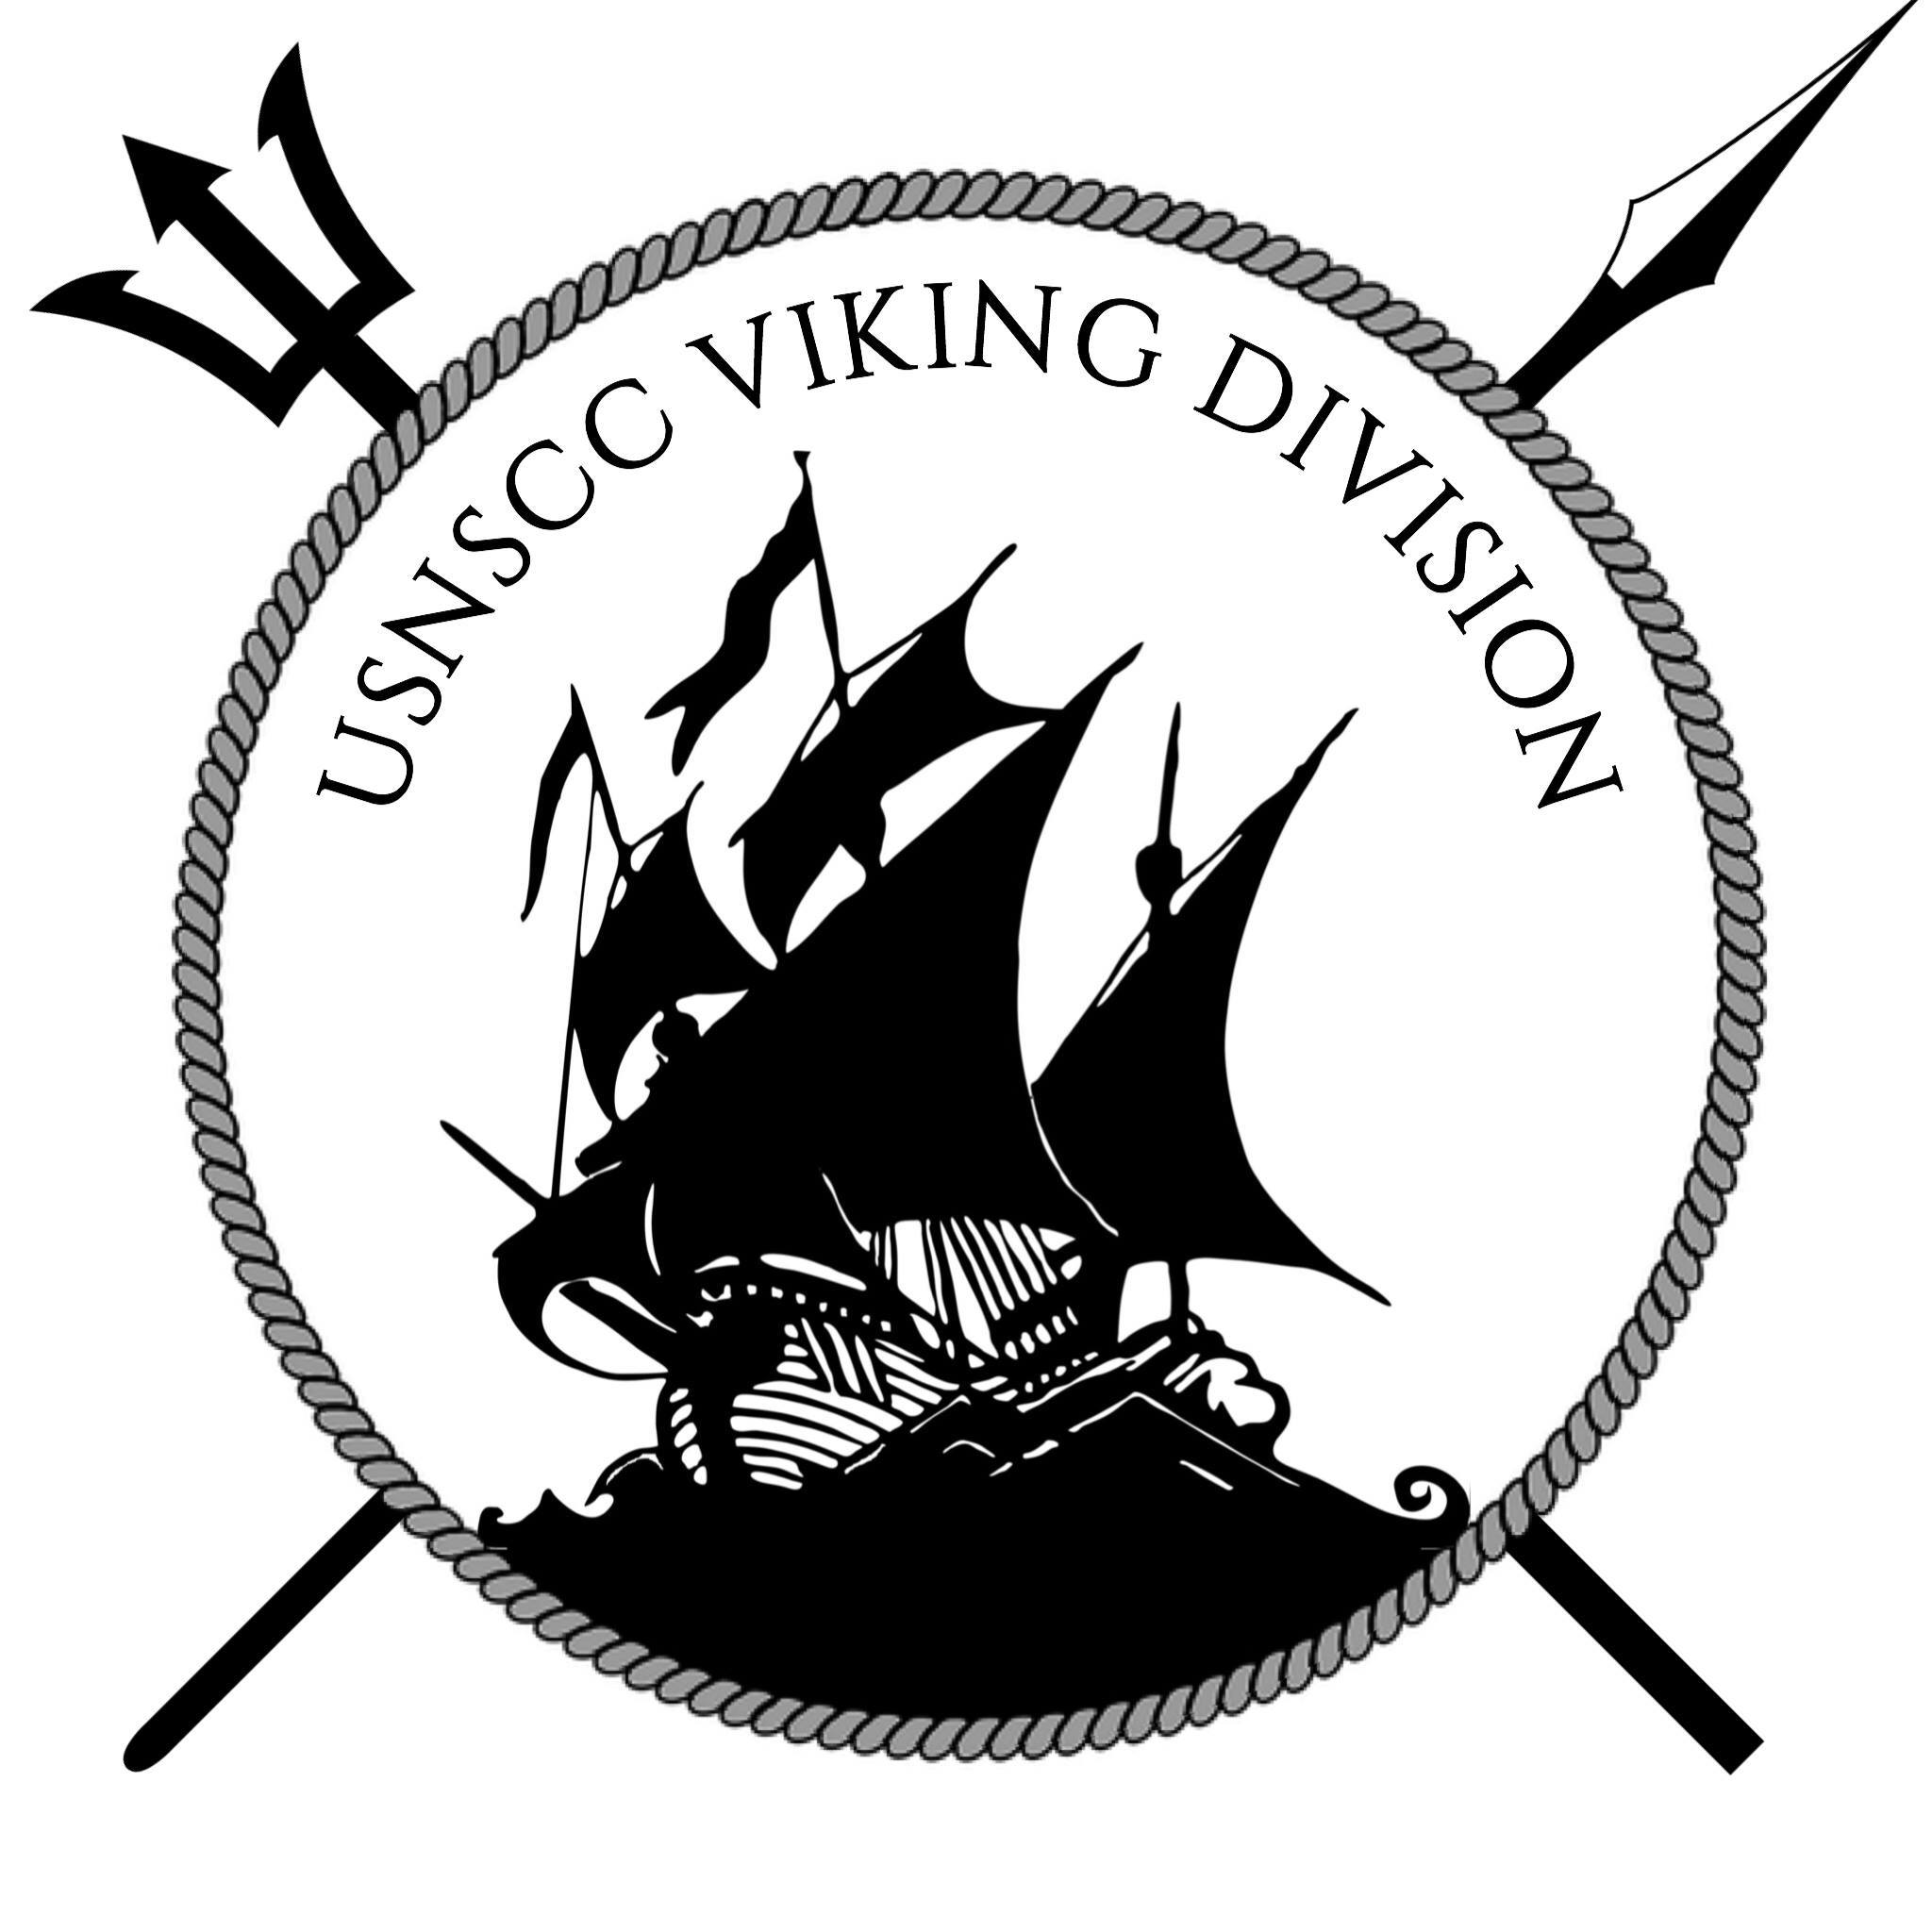 USNSCC Viking Division